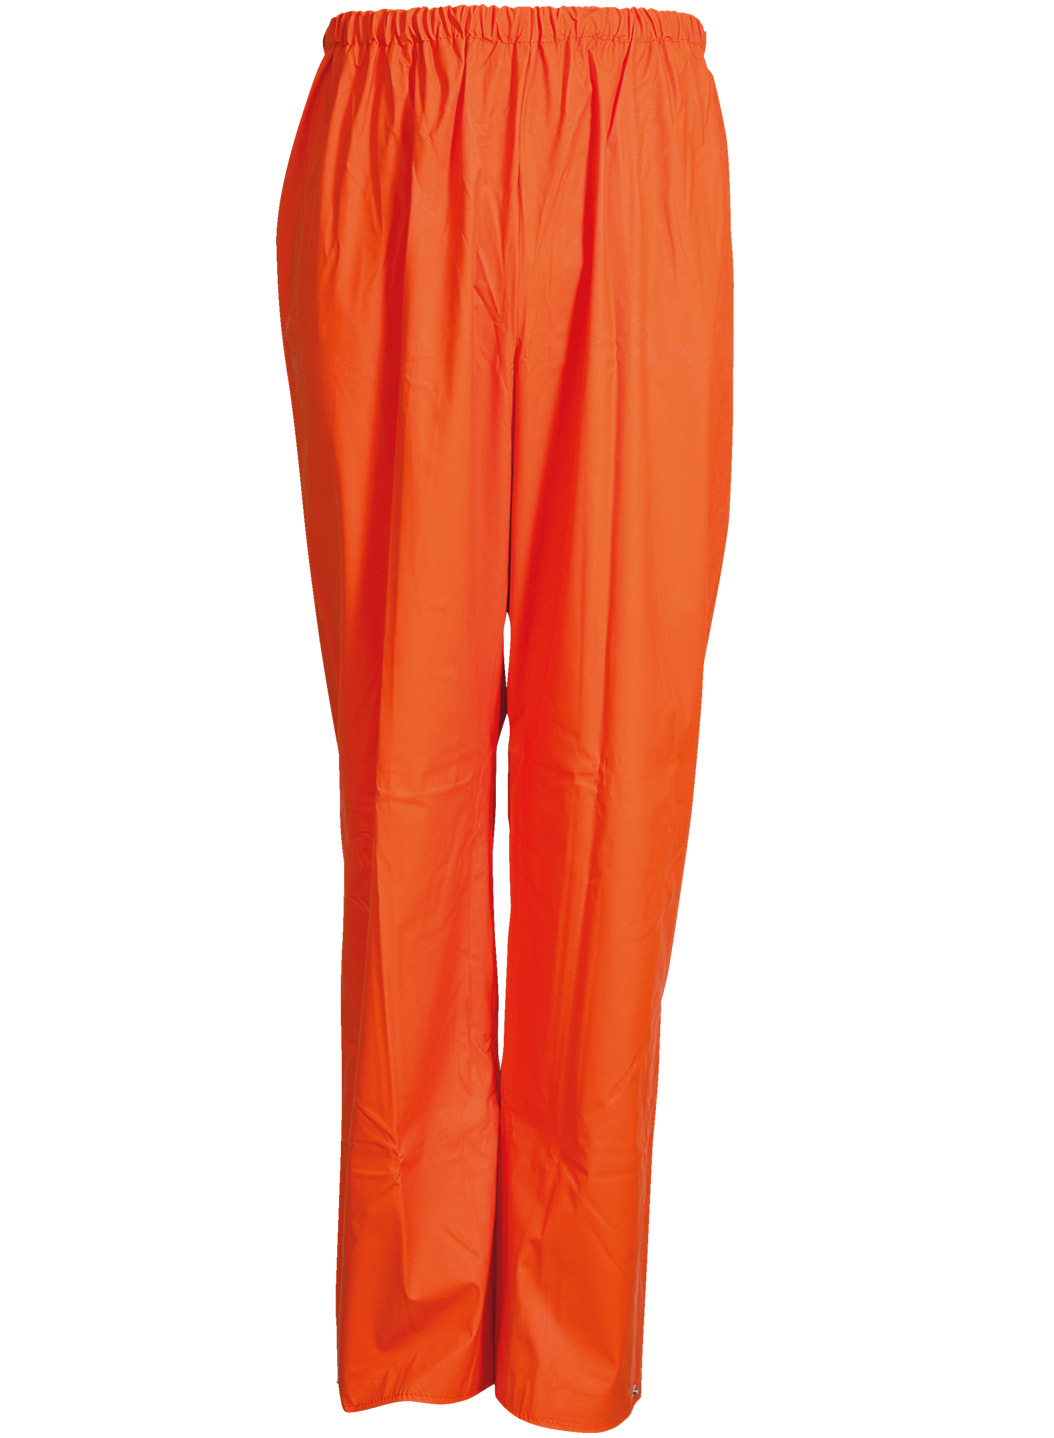 ELKA-Rainwear, PVC LIGHT Bundhose, 320g/m², orange